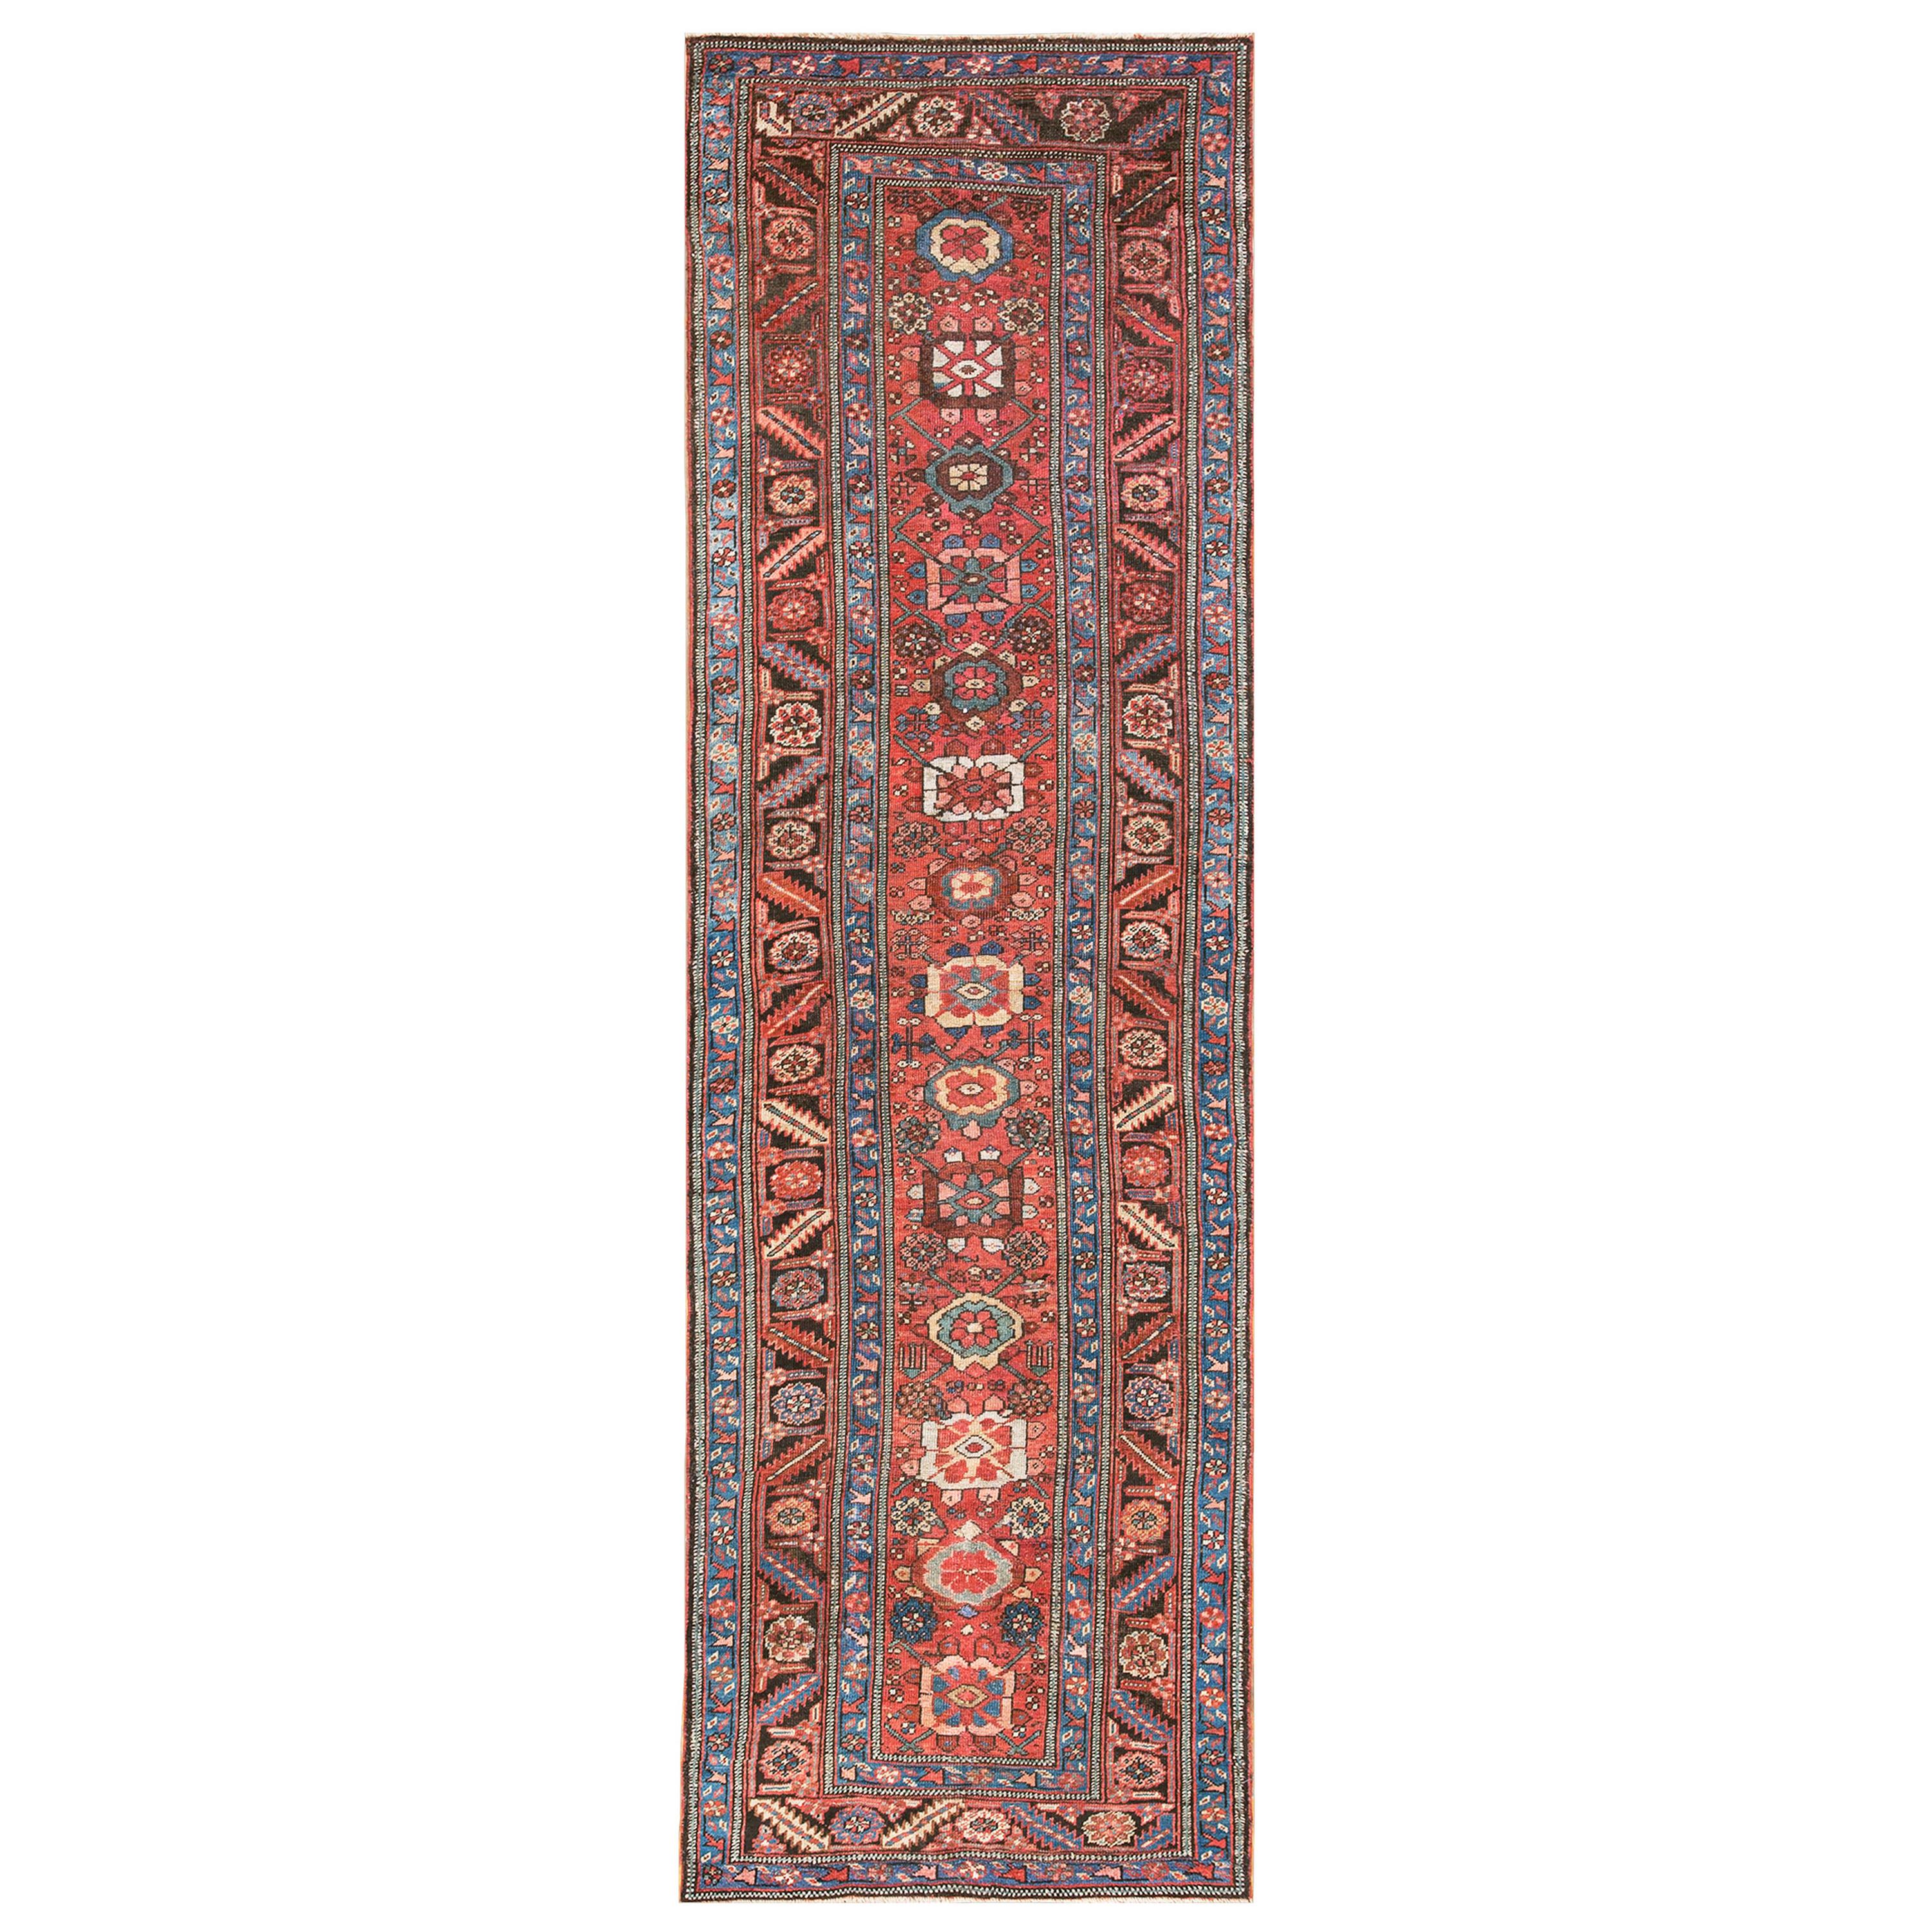 19th Century Persian Bakshaiesh Carpet ( 3' x 10'4" - 90 x 315 ) For Sale